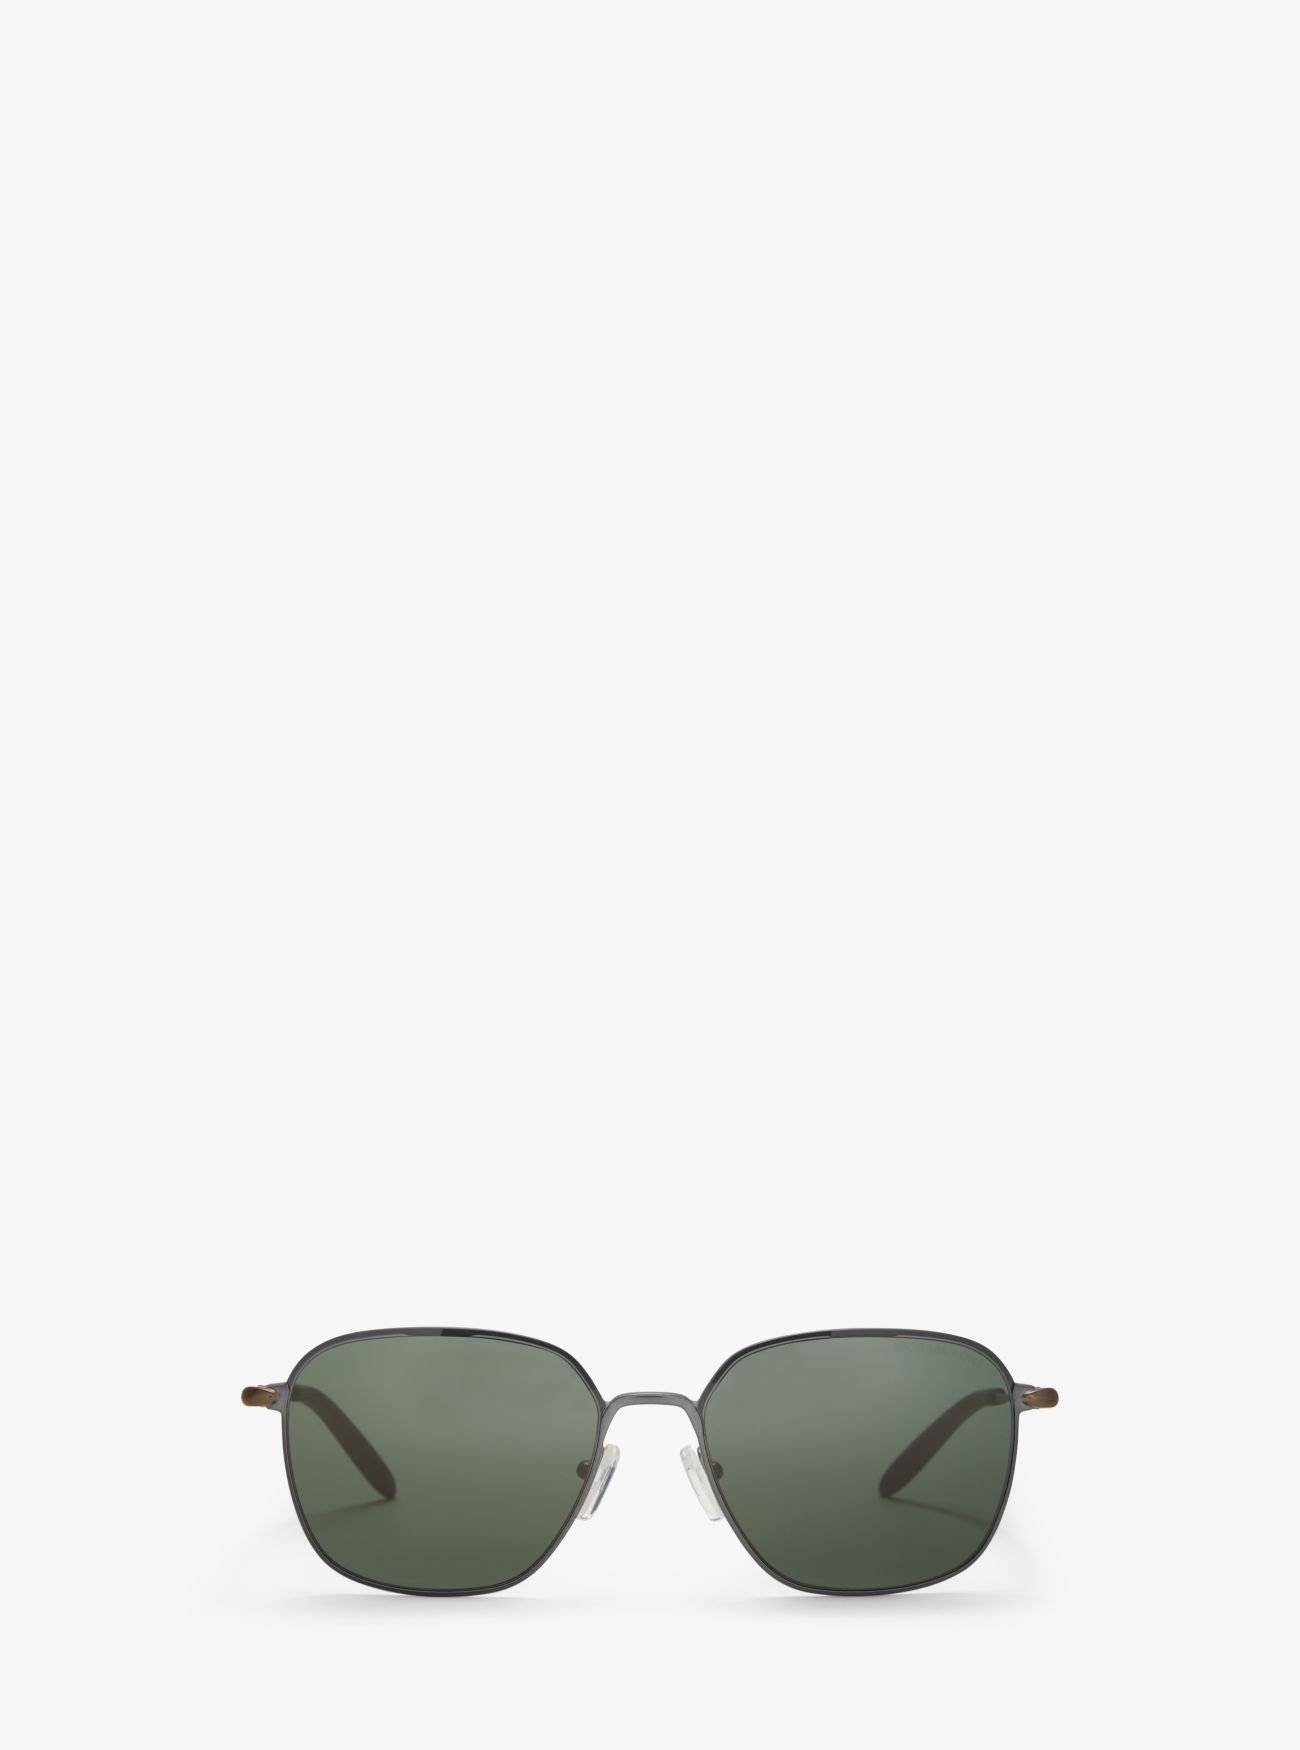 MK Tahoe Sunglasses - Green - Michael Kors